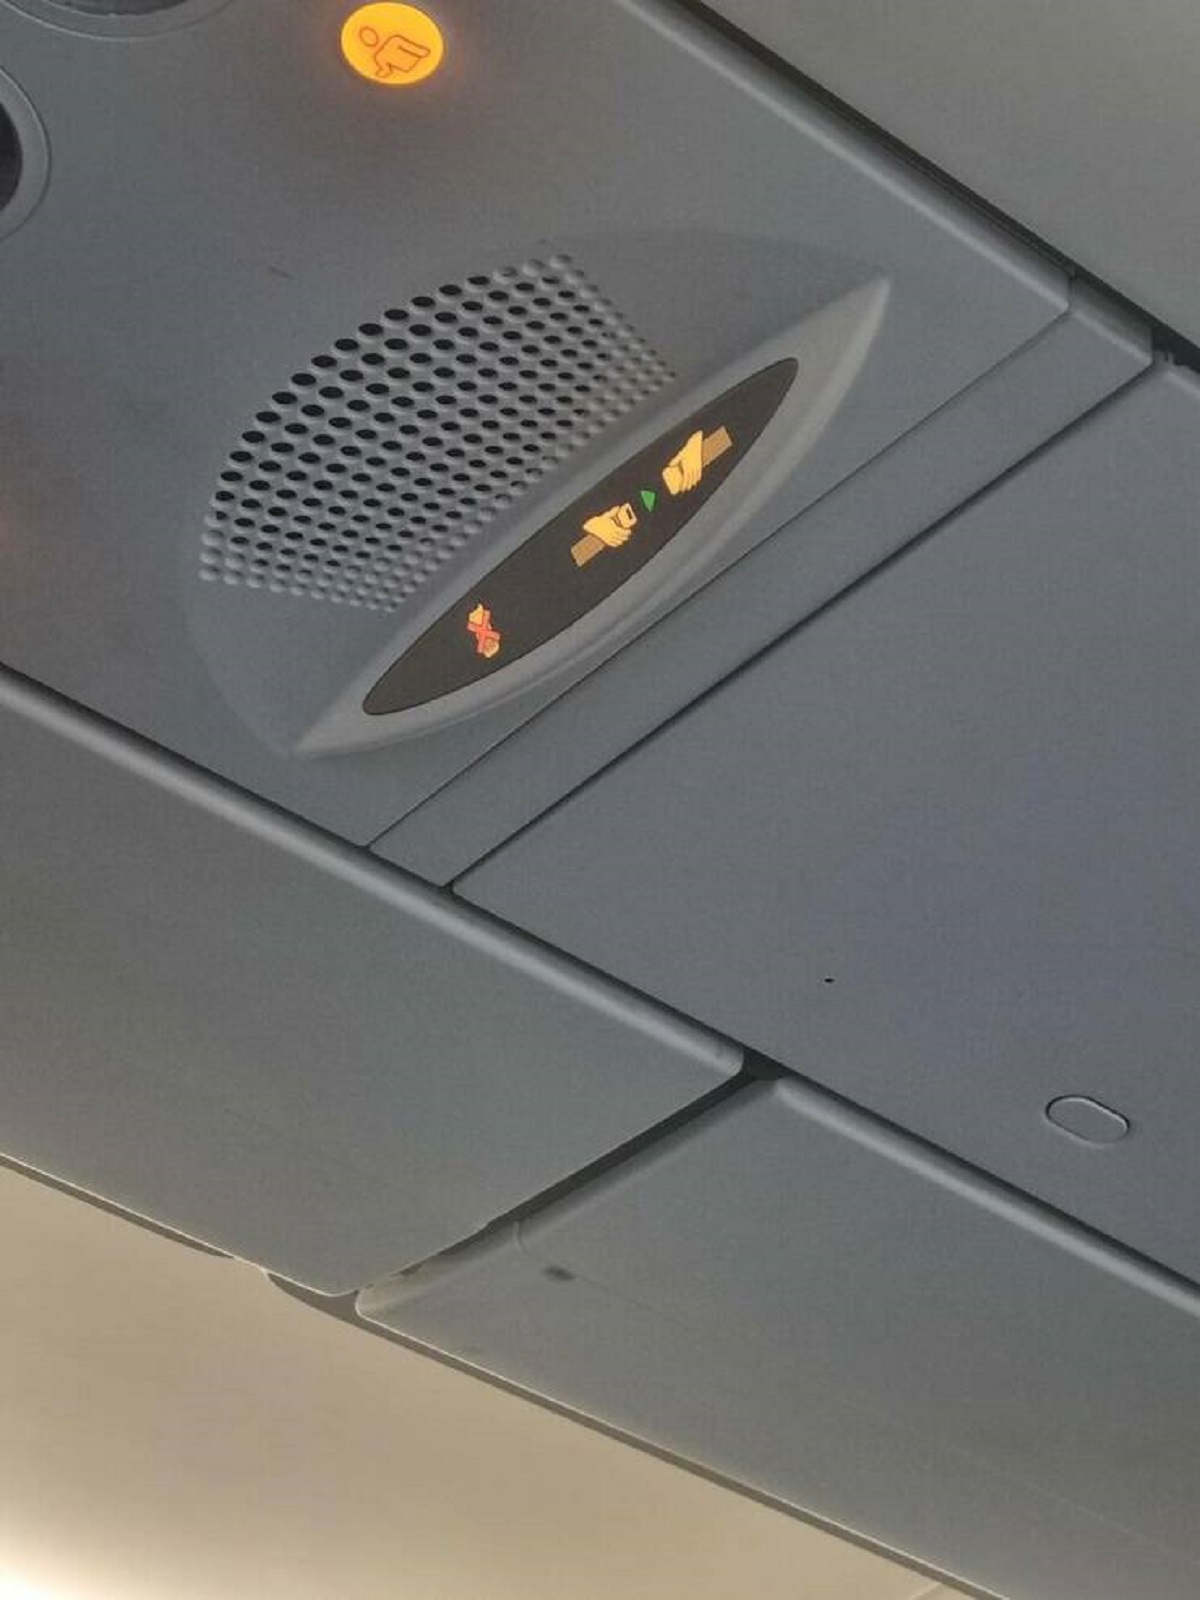 "This plane has a no phone sign instead of no smoking!"